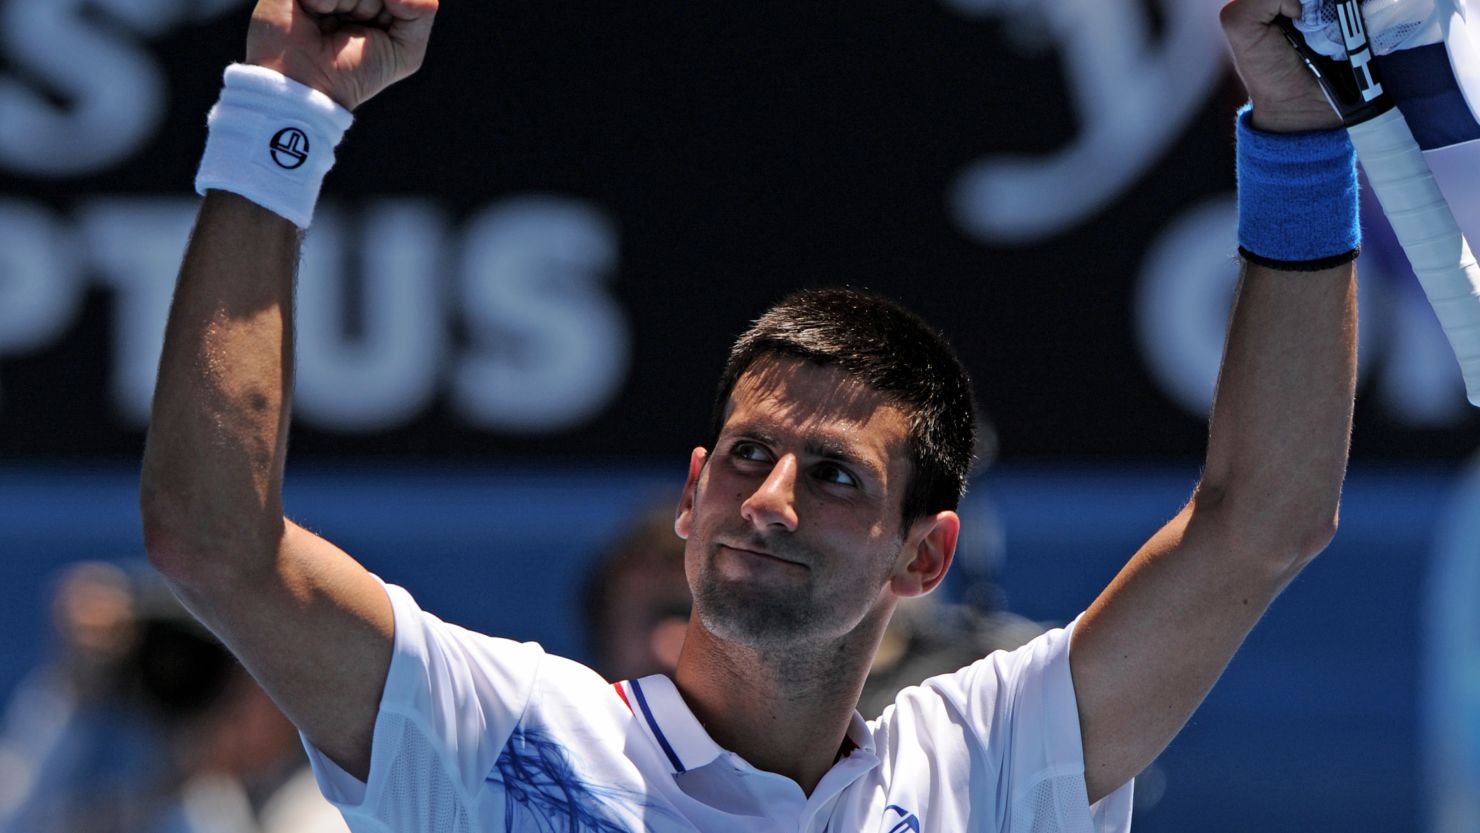 Serbia's Novak Djokovic won three out of four grand slams in 2011, including the Australian Open.